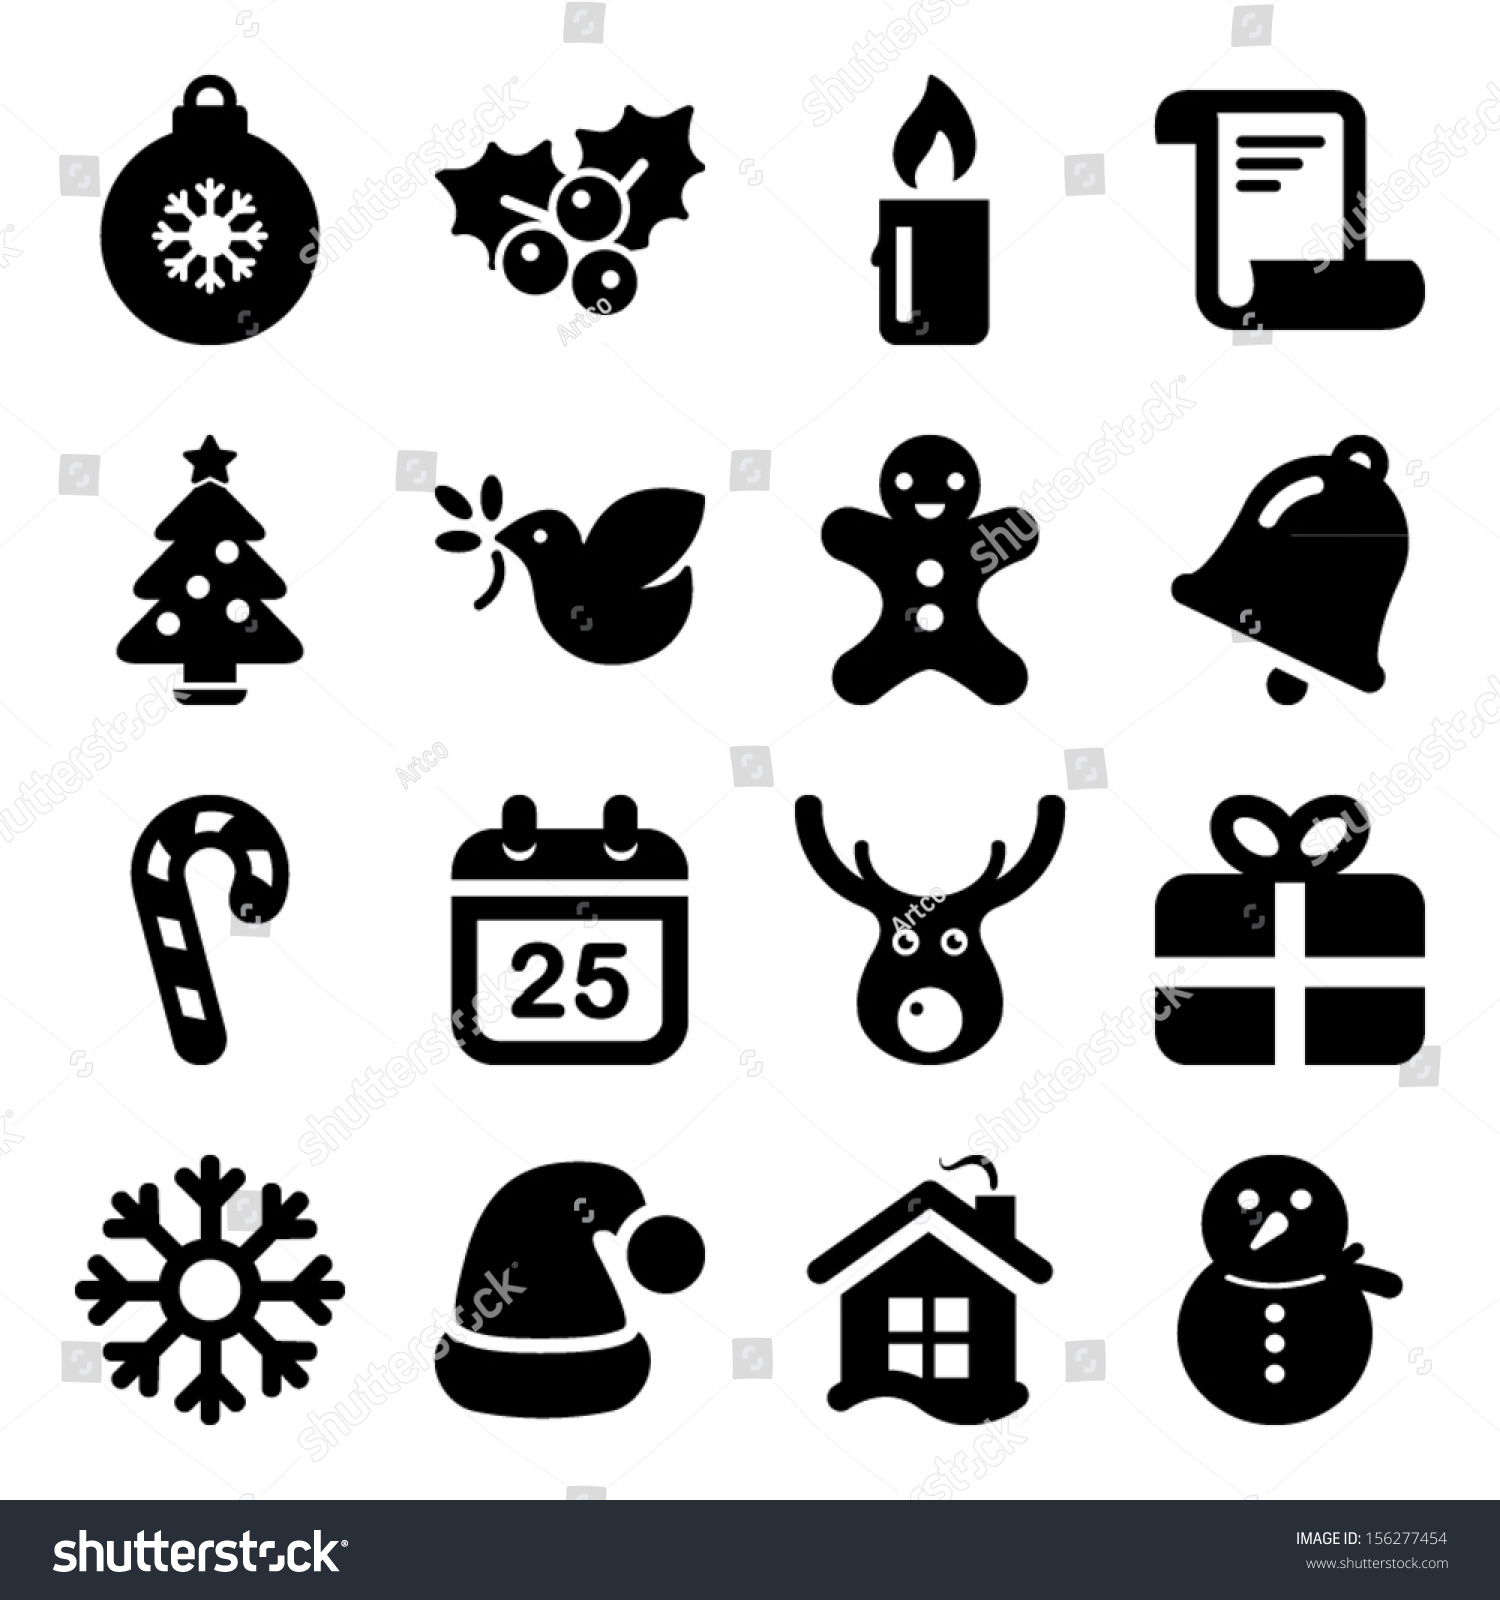 Christmas Icon Set Black Stock Vector 156277454 - Shutterstock